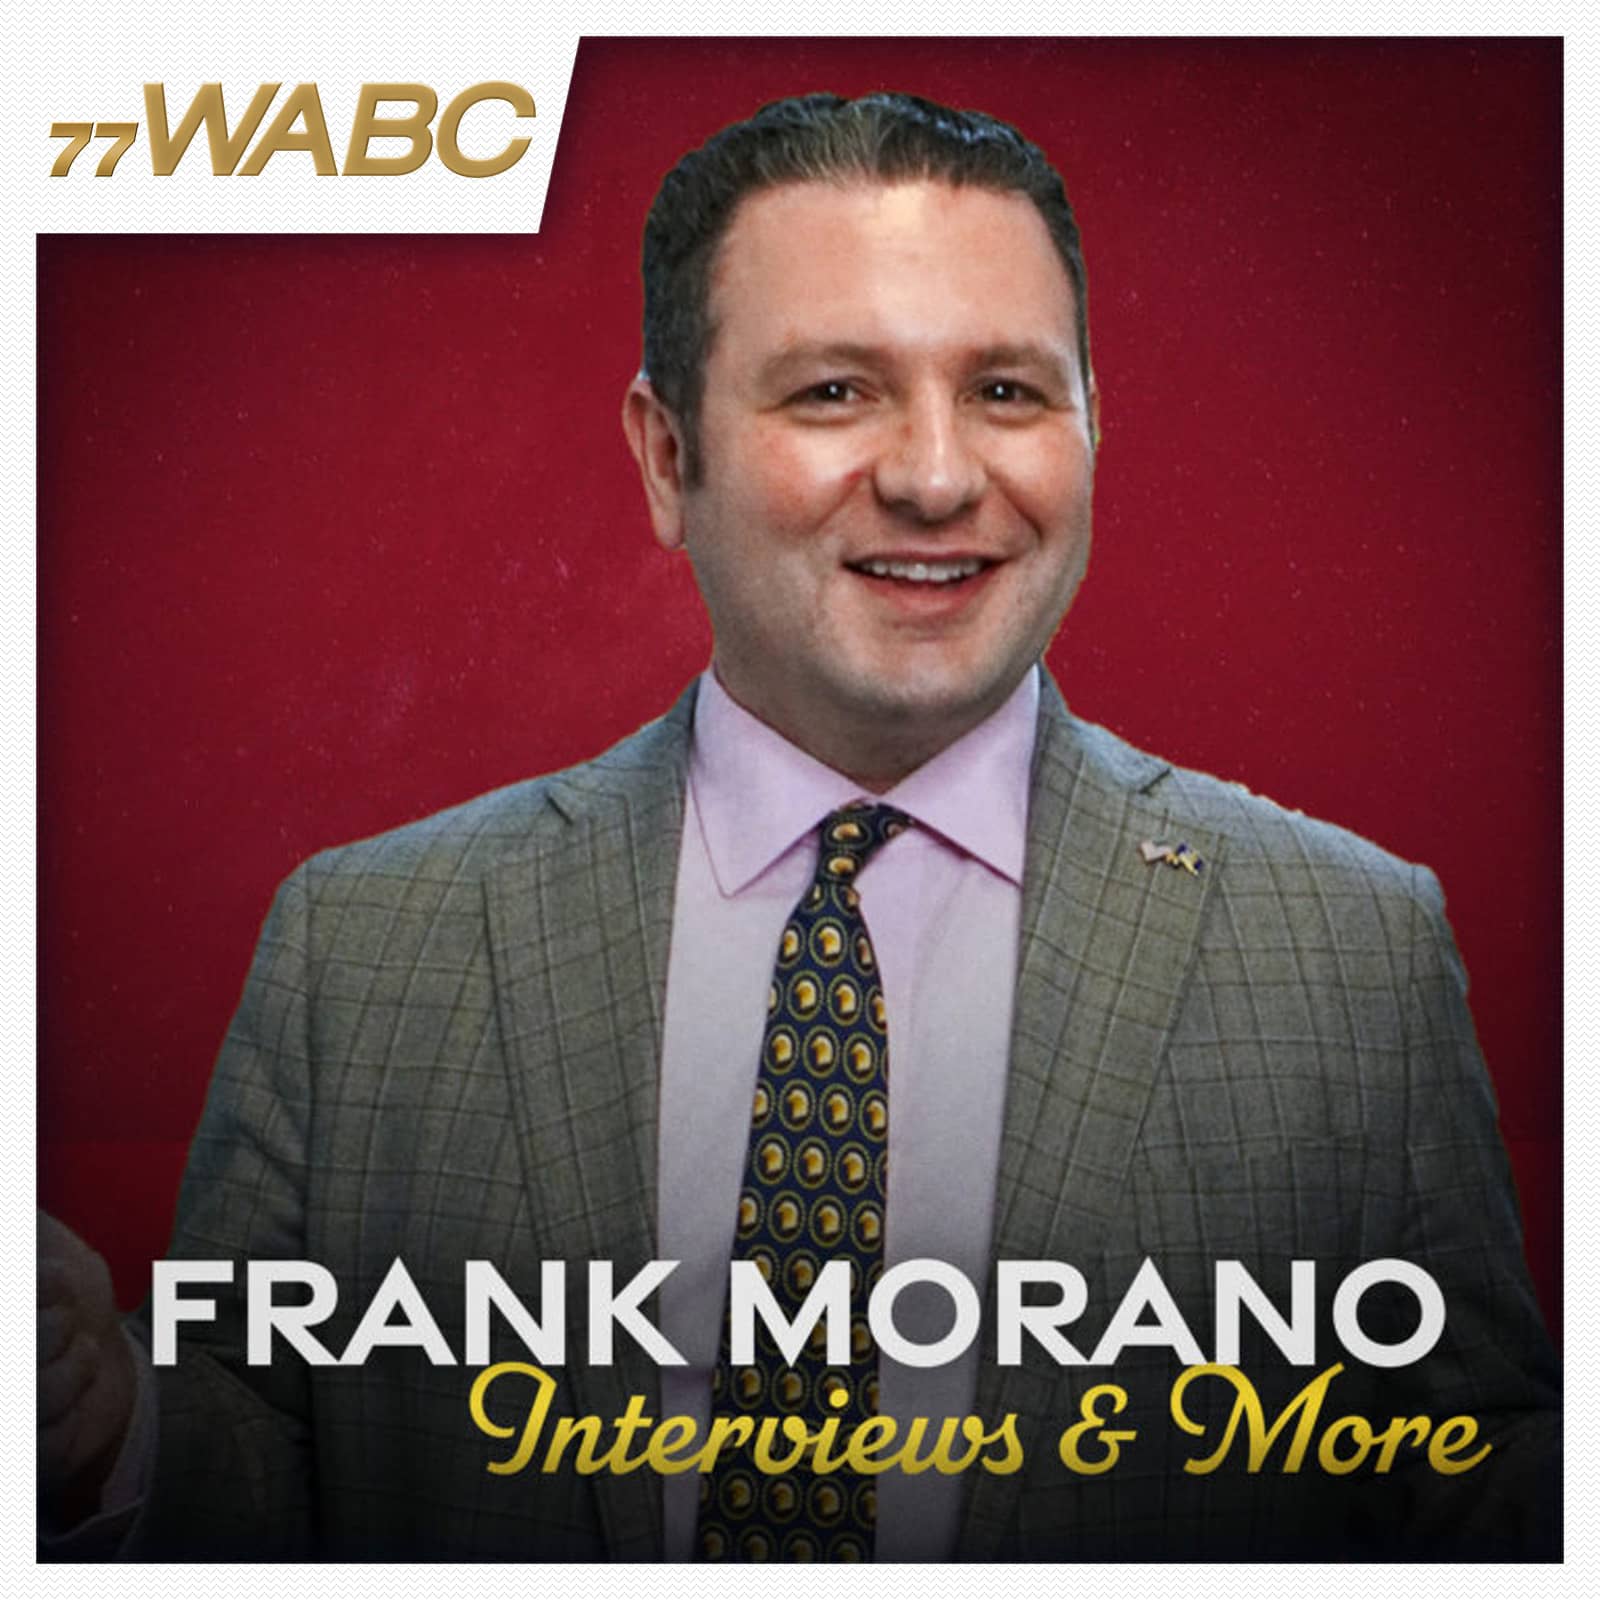 frank-morano-interviews-and-more-podcast-new-logo-359